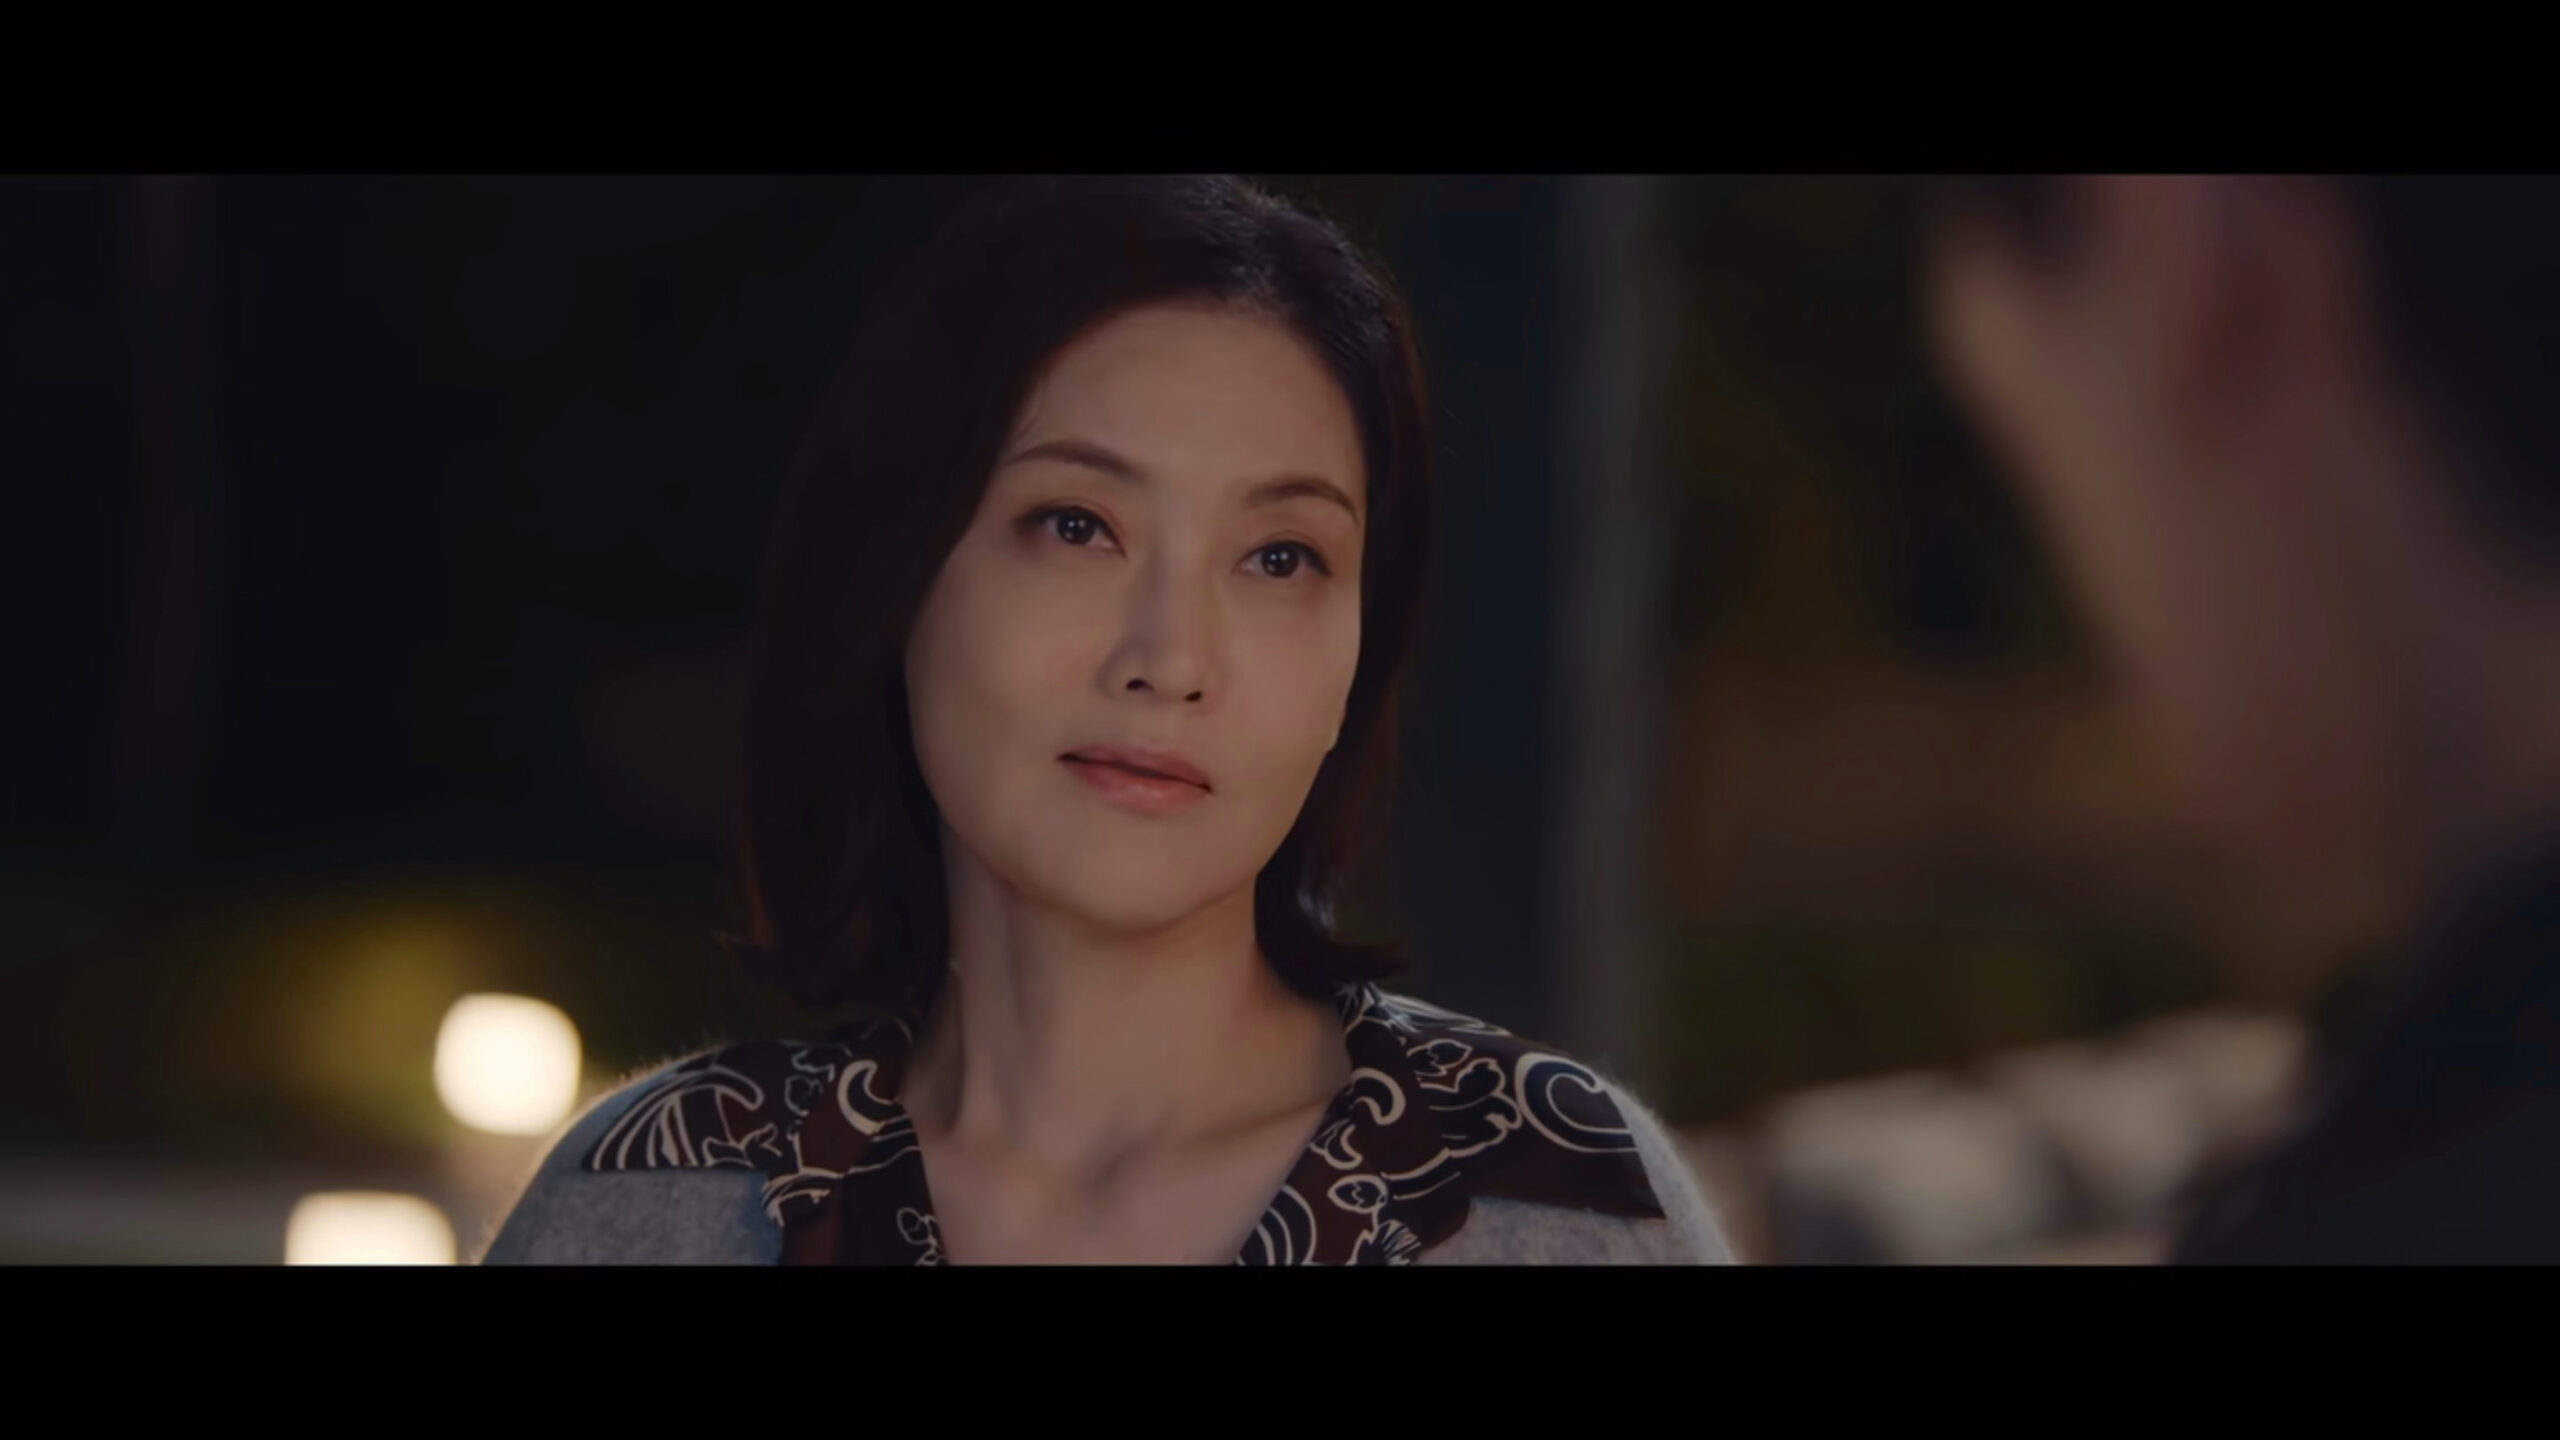 King the Land: Episodes 1-2 » Dramabeans Korean drama recaps